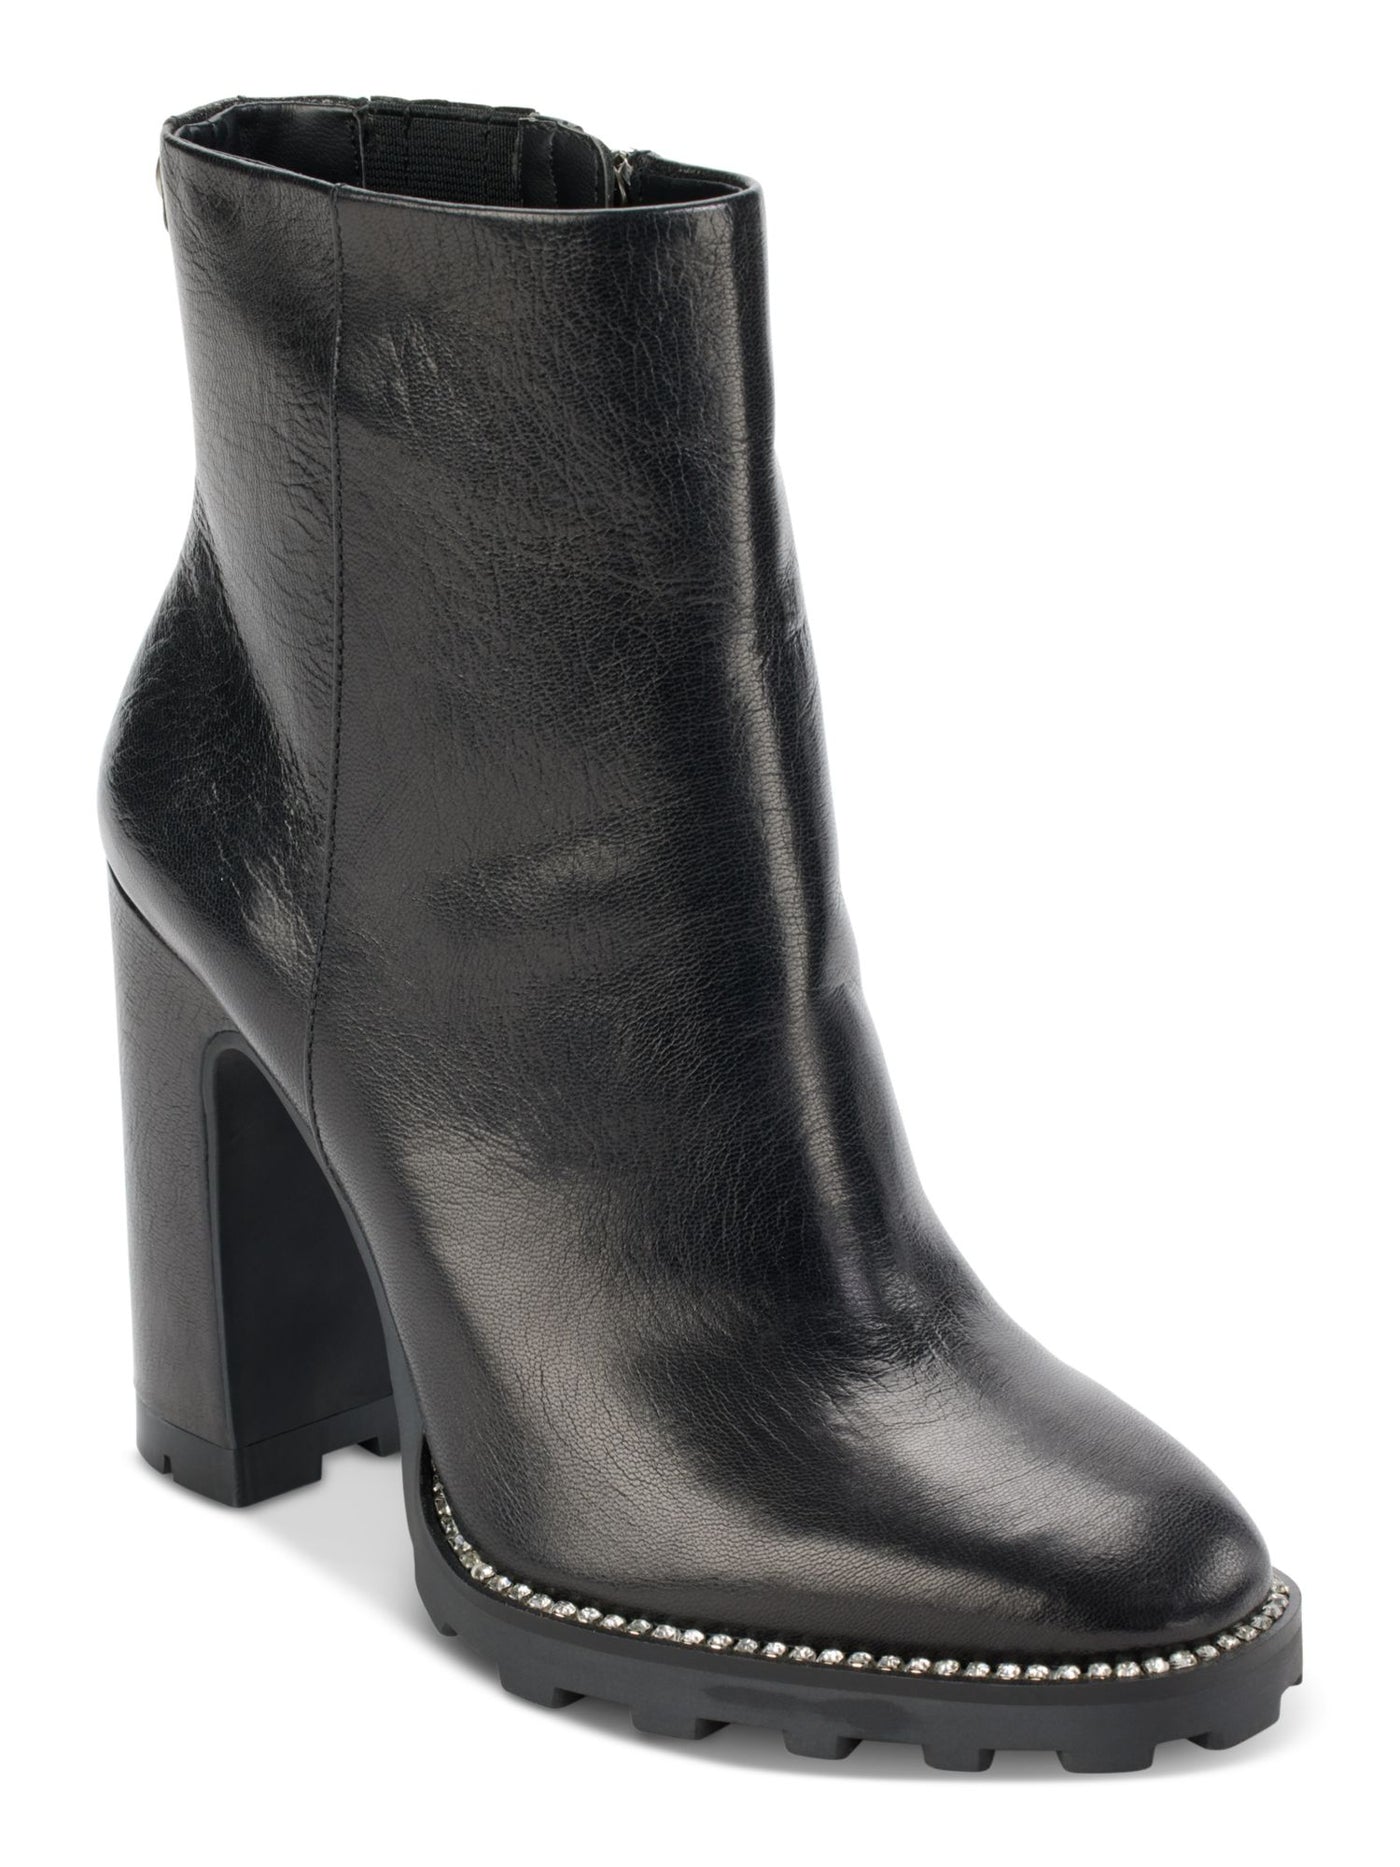 KARL LAGERFELD PARIS Womens Black Comfort Peppy Almond Toe Block Heel Zip-Up Leather Dress Boots 11 M